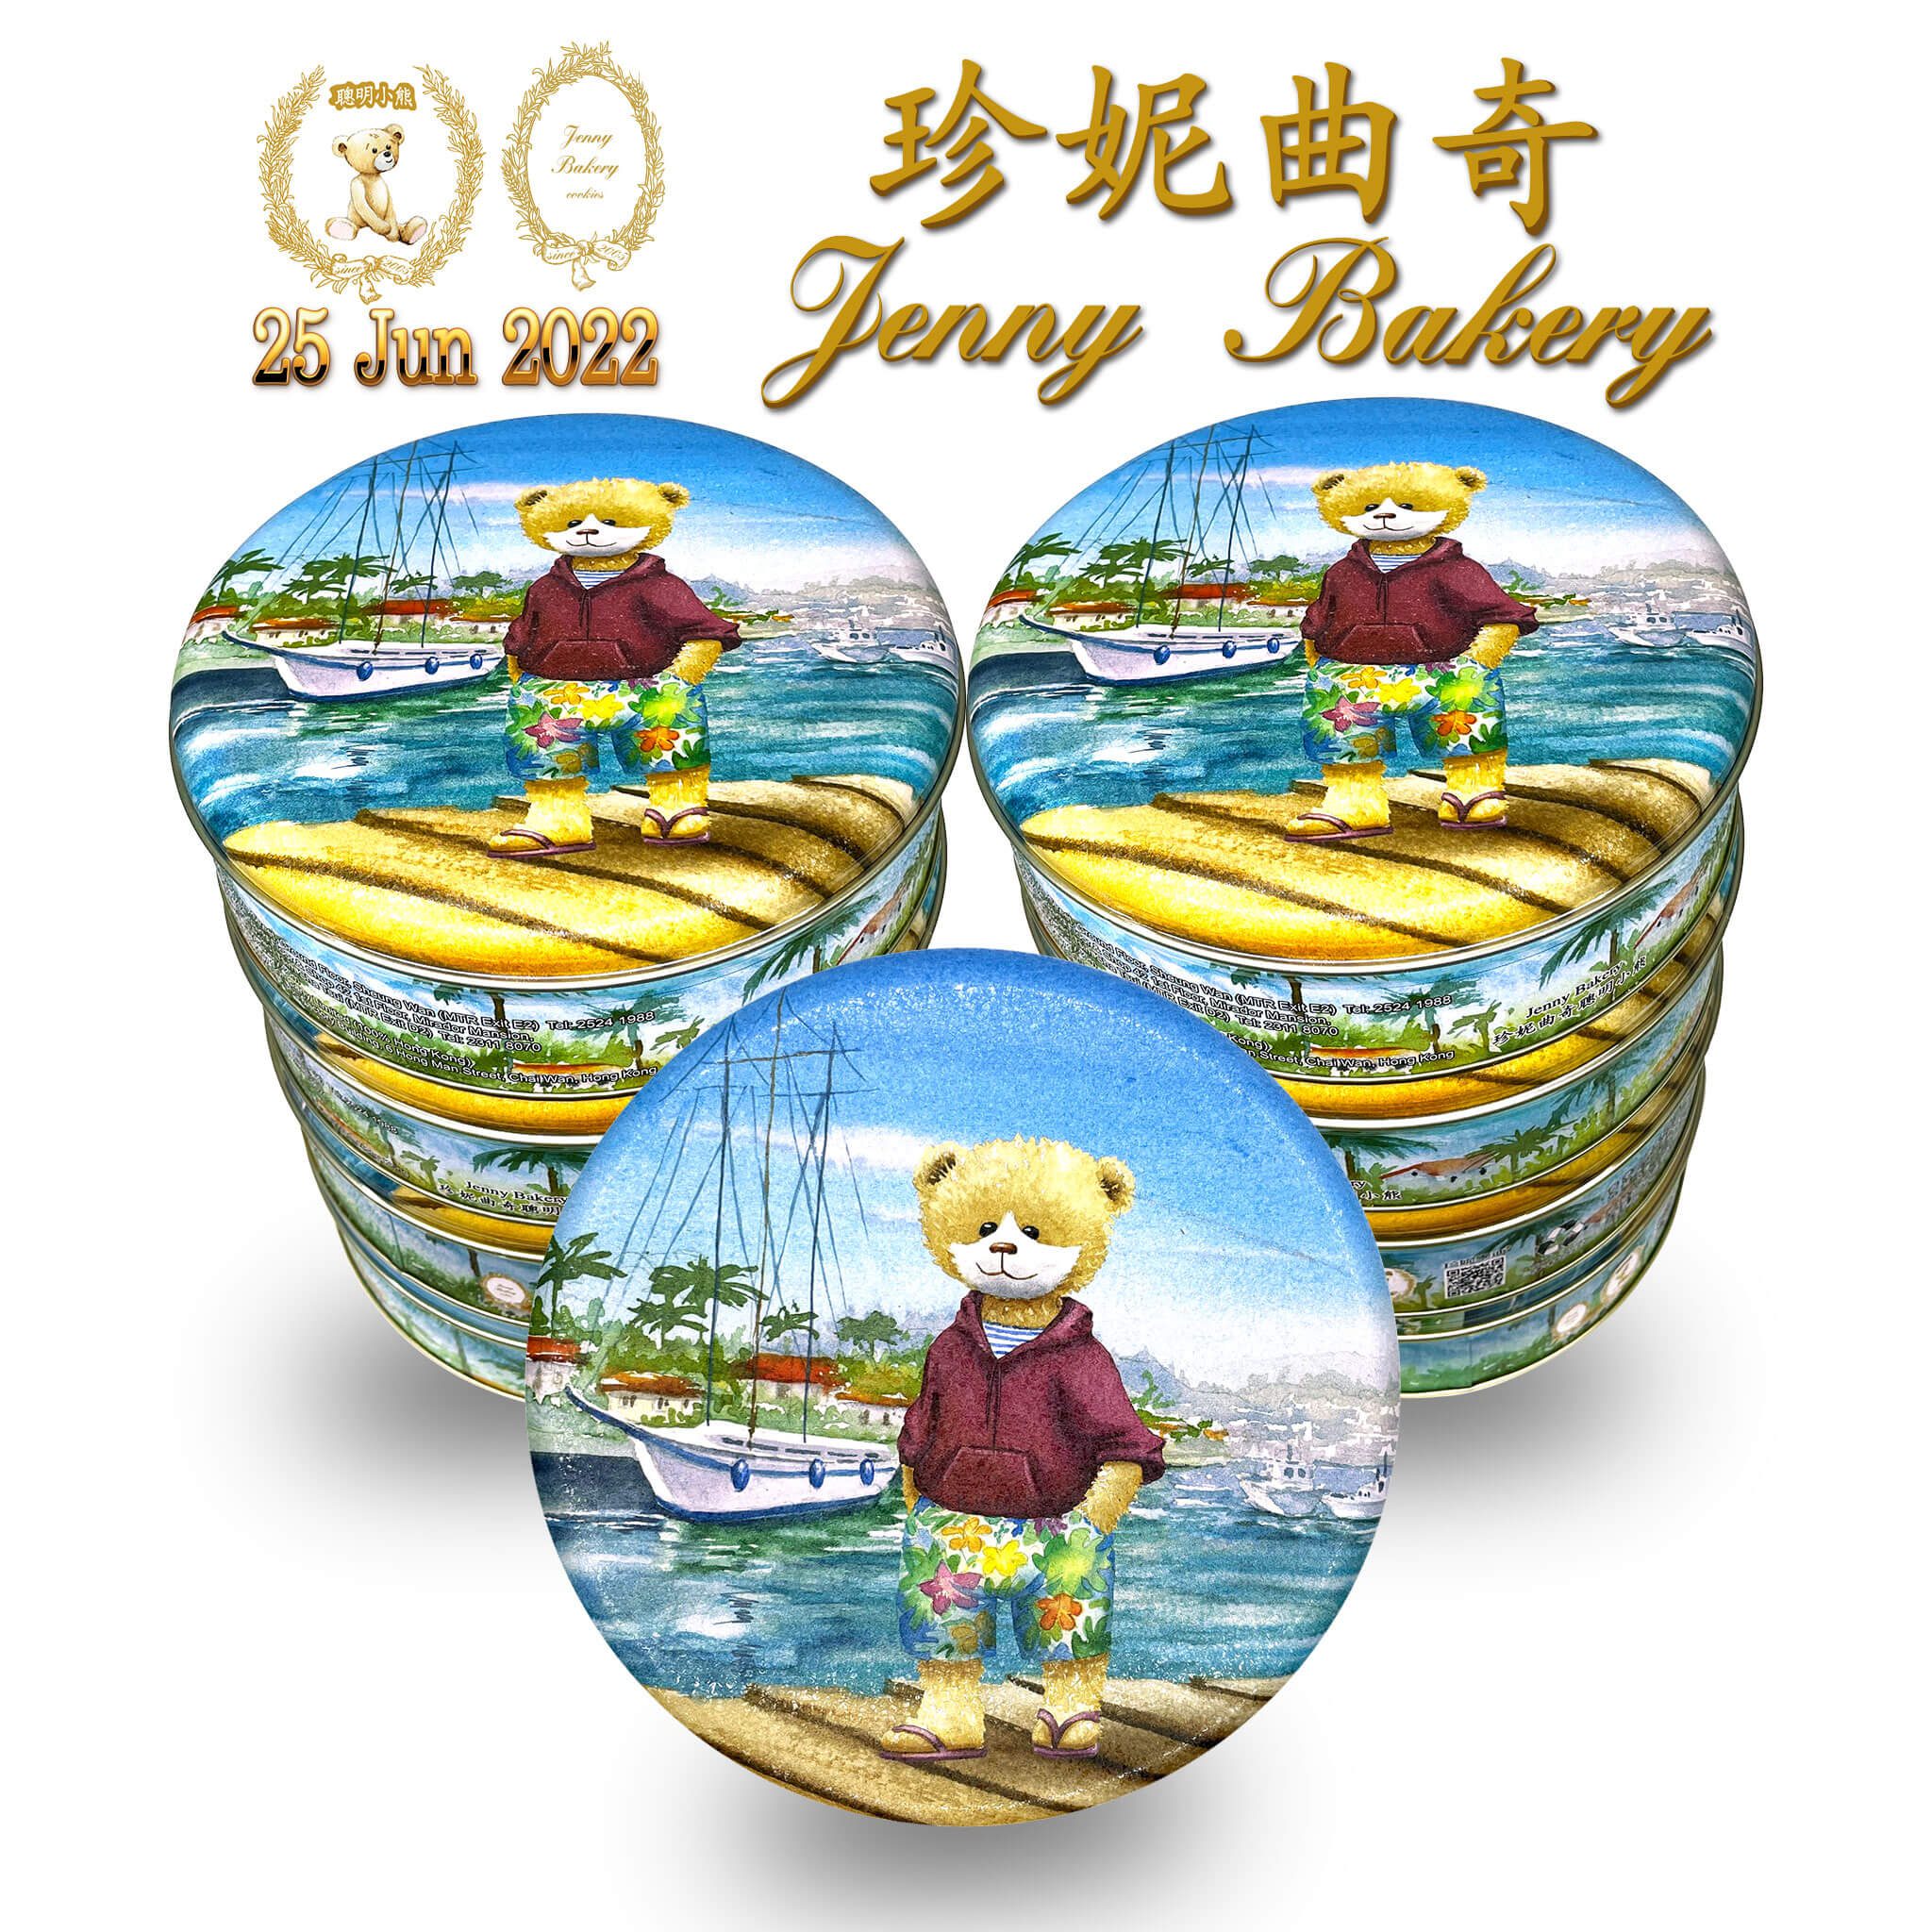 Jenny Bakery Hong Kong | Design20220622 Yatch